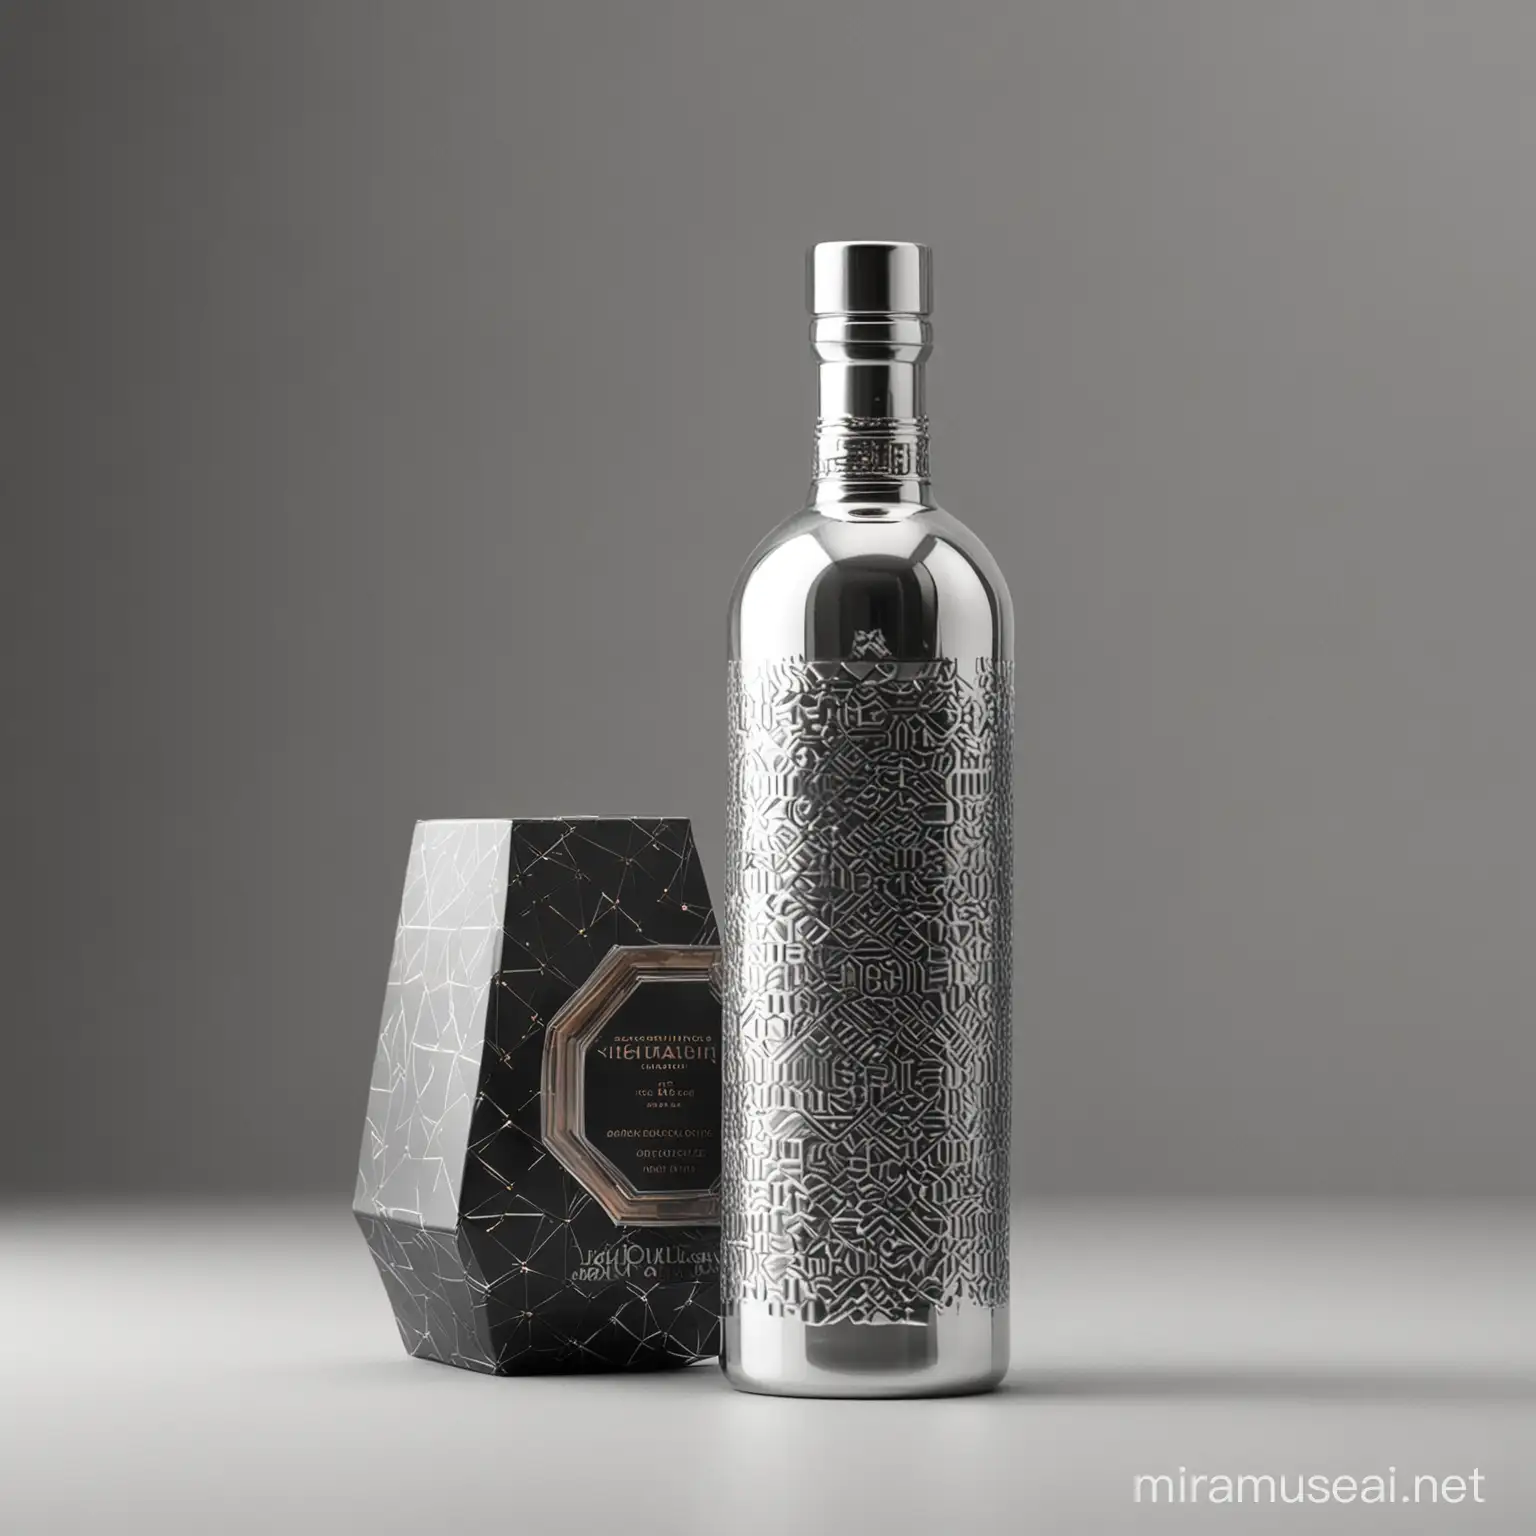 Modern health liquor packaging design, high end liquor, 500 ml ceramic bottle, photograph images, high details, silver and black geometric texture, brand name is Octane